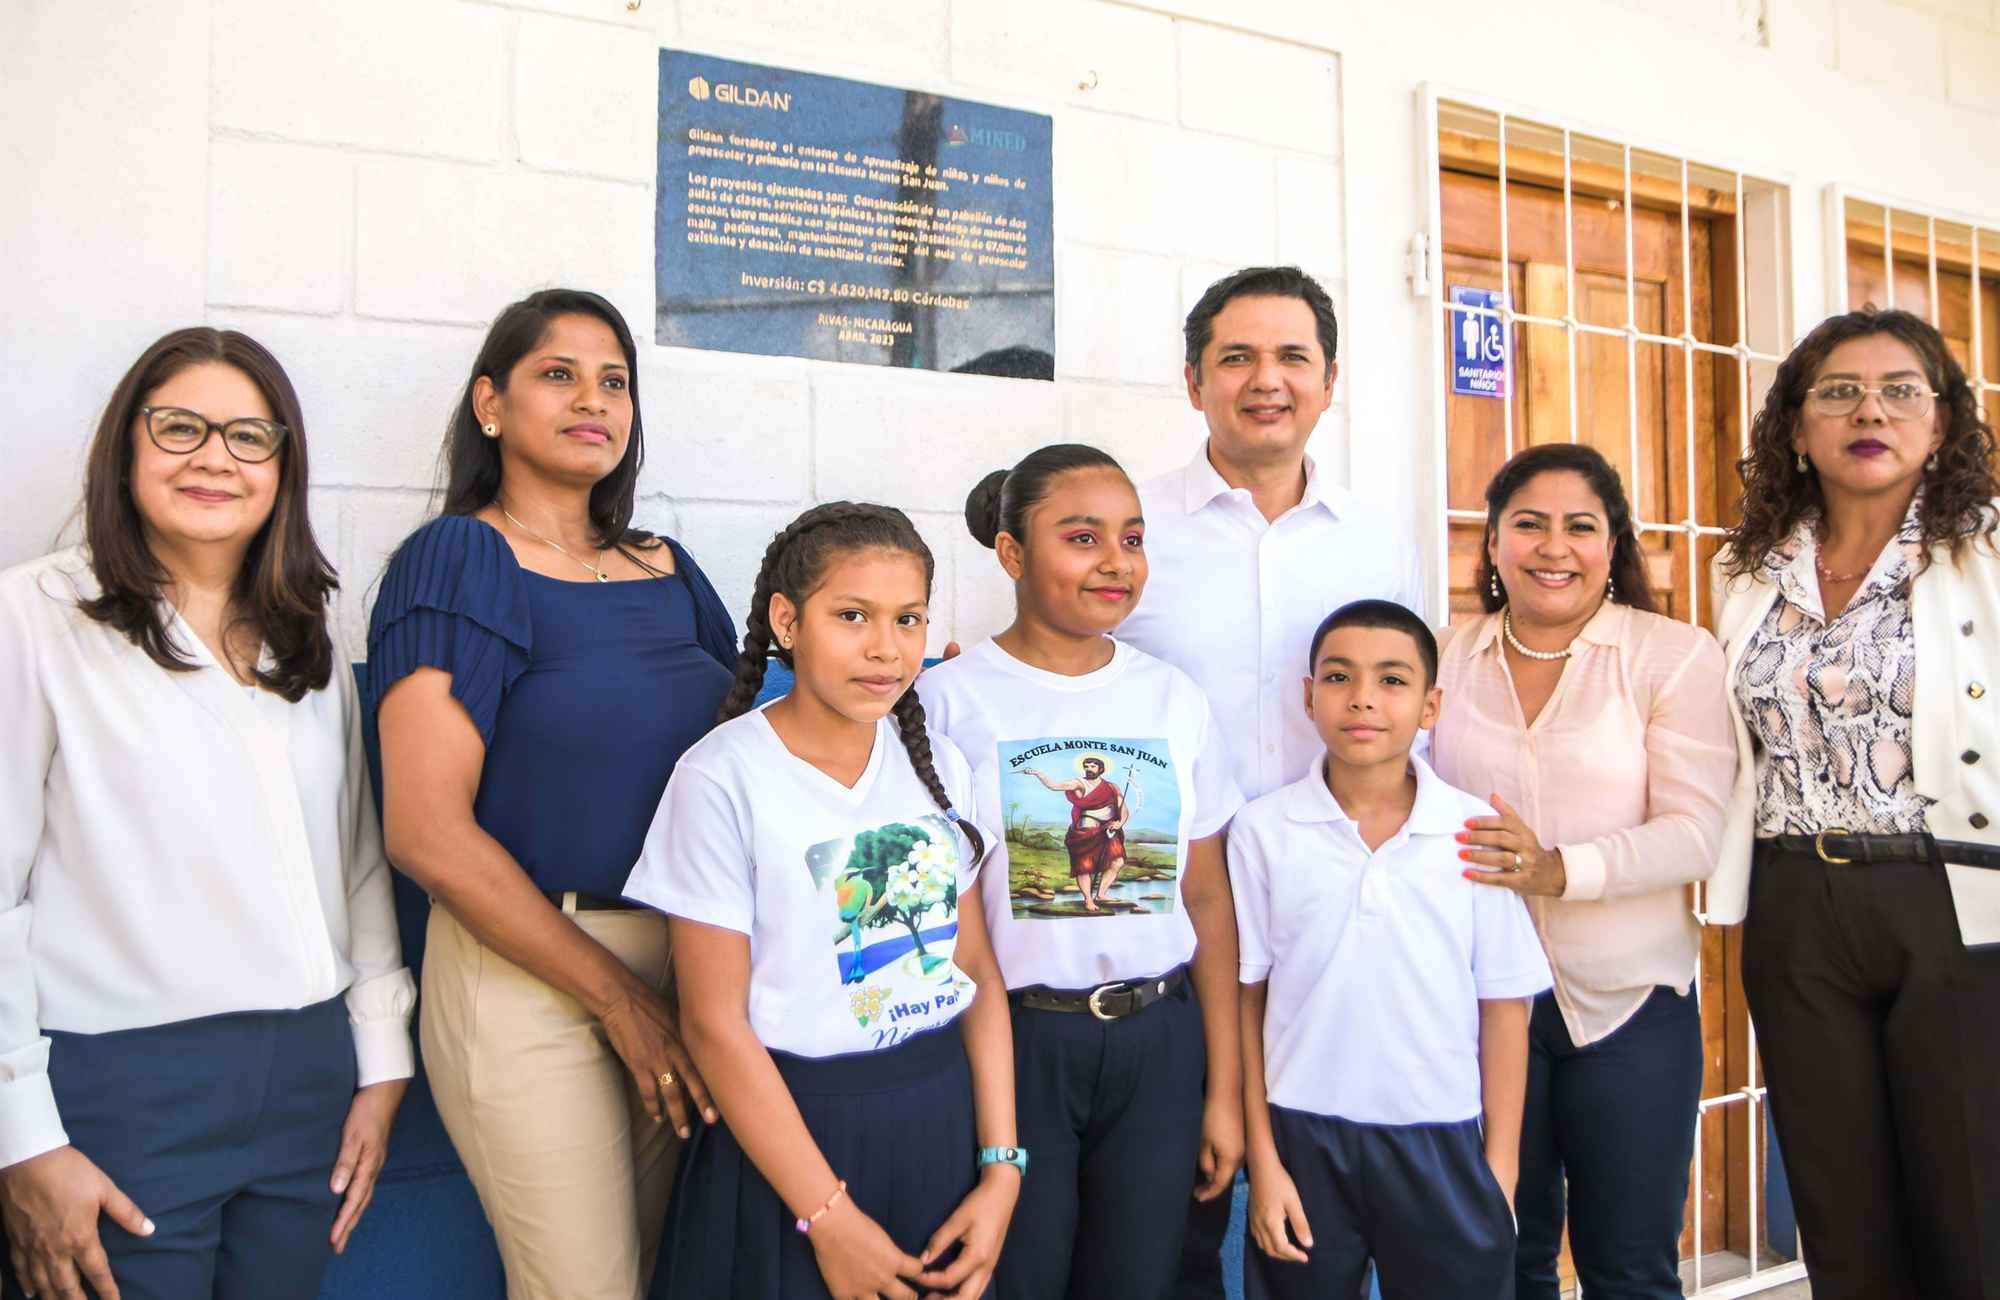 Gildan Invests Over $120,000 in School Construction and Infrastructure Improvement in Nicaragua